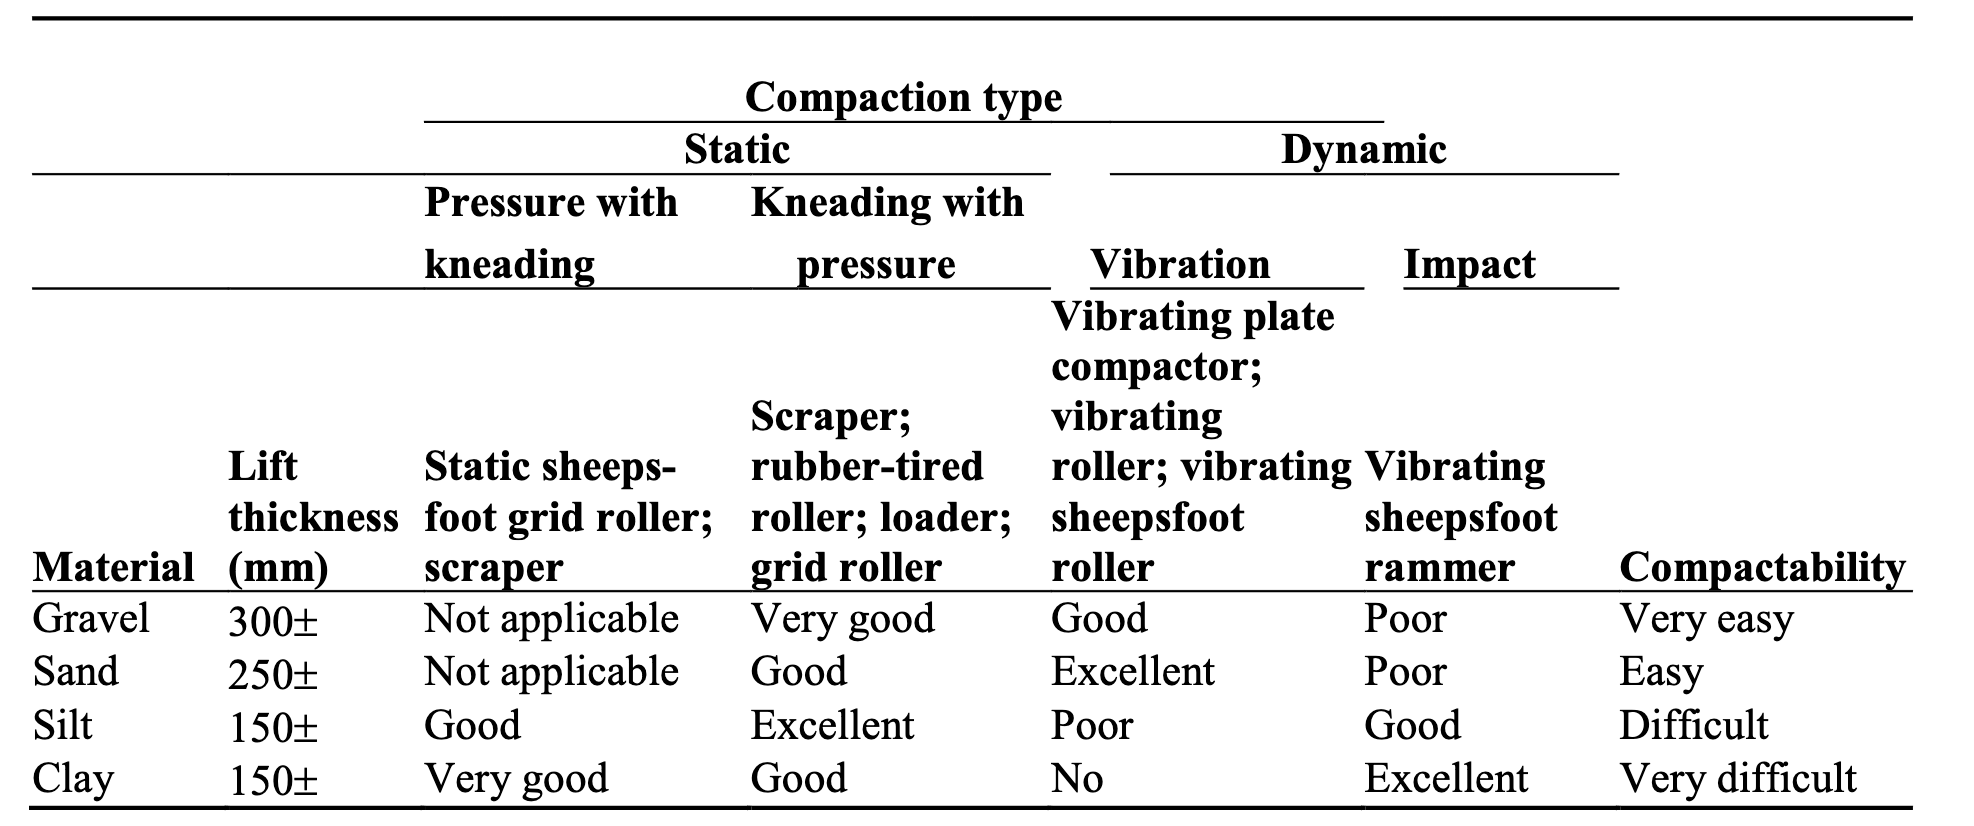 Comparison of Field Compactors for Various Soil Types